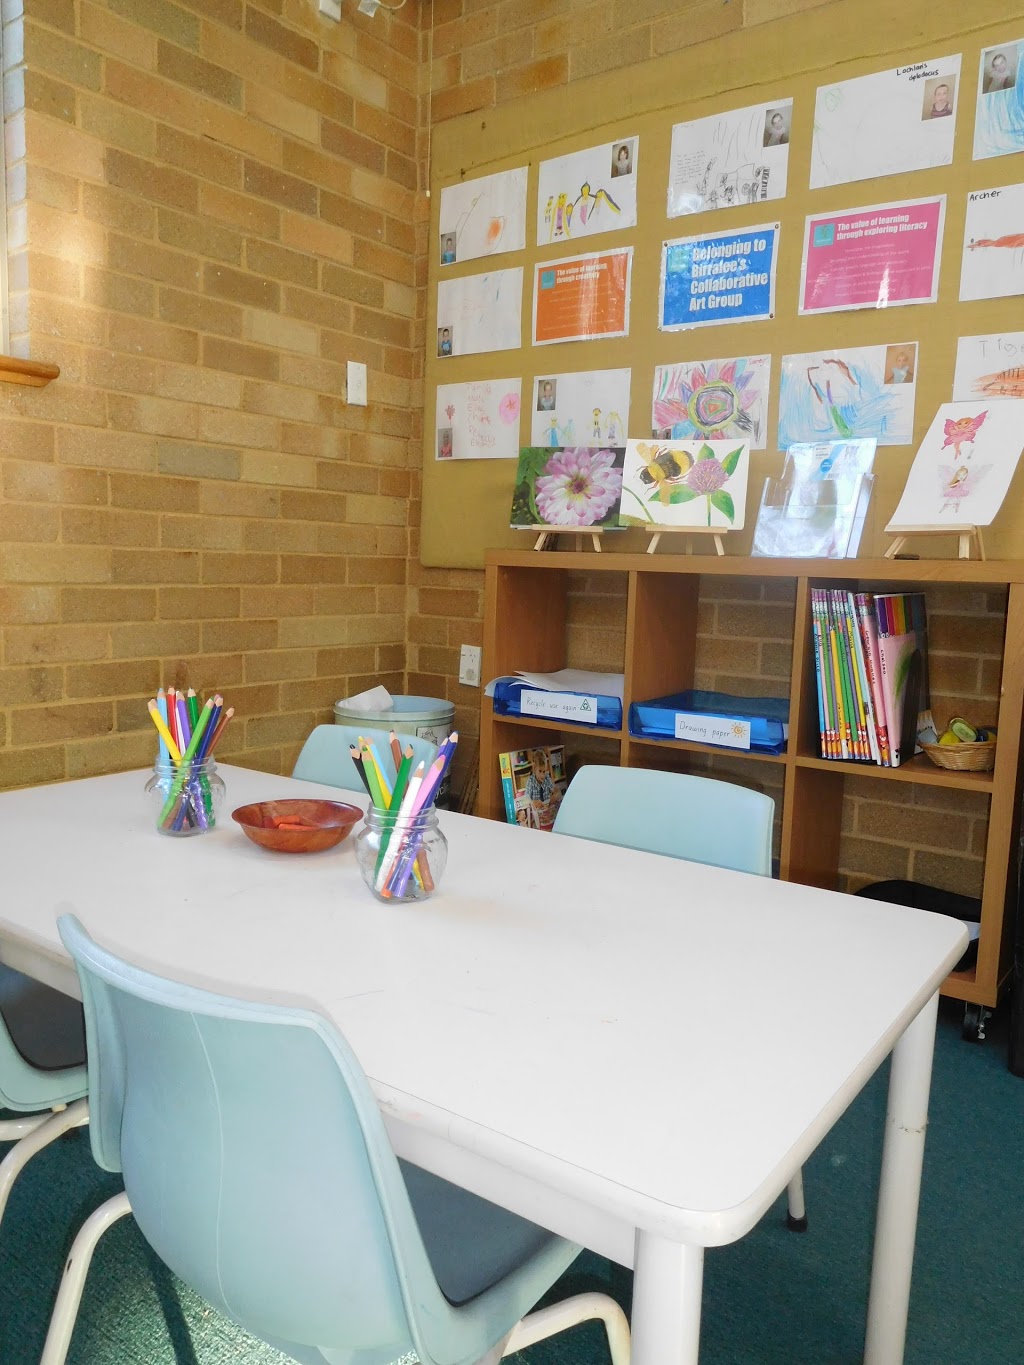 Birralee Extended Hours Preschool | school | 48A Bindea St, Como NSW 2226, Australia | 0295286975 OR +61 2 9528 6975